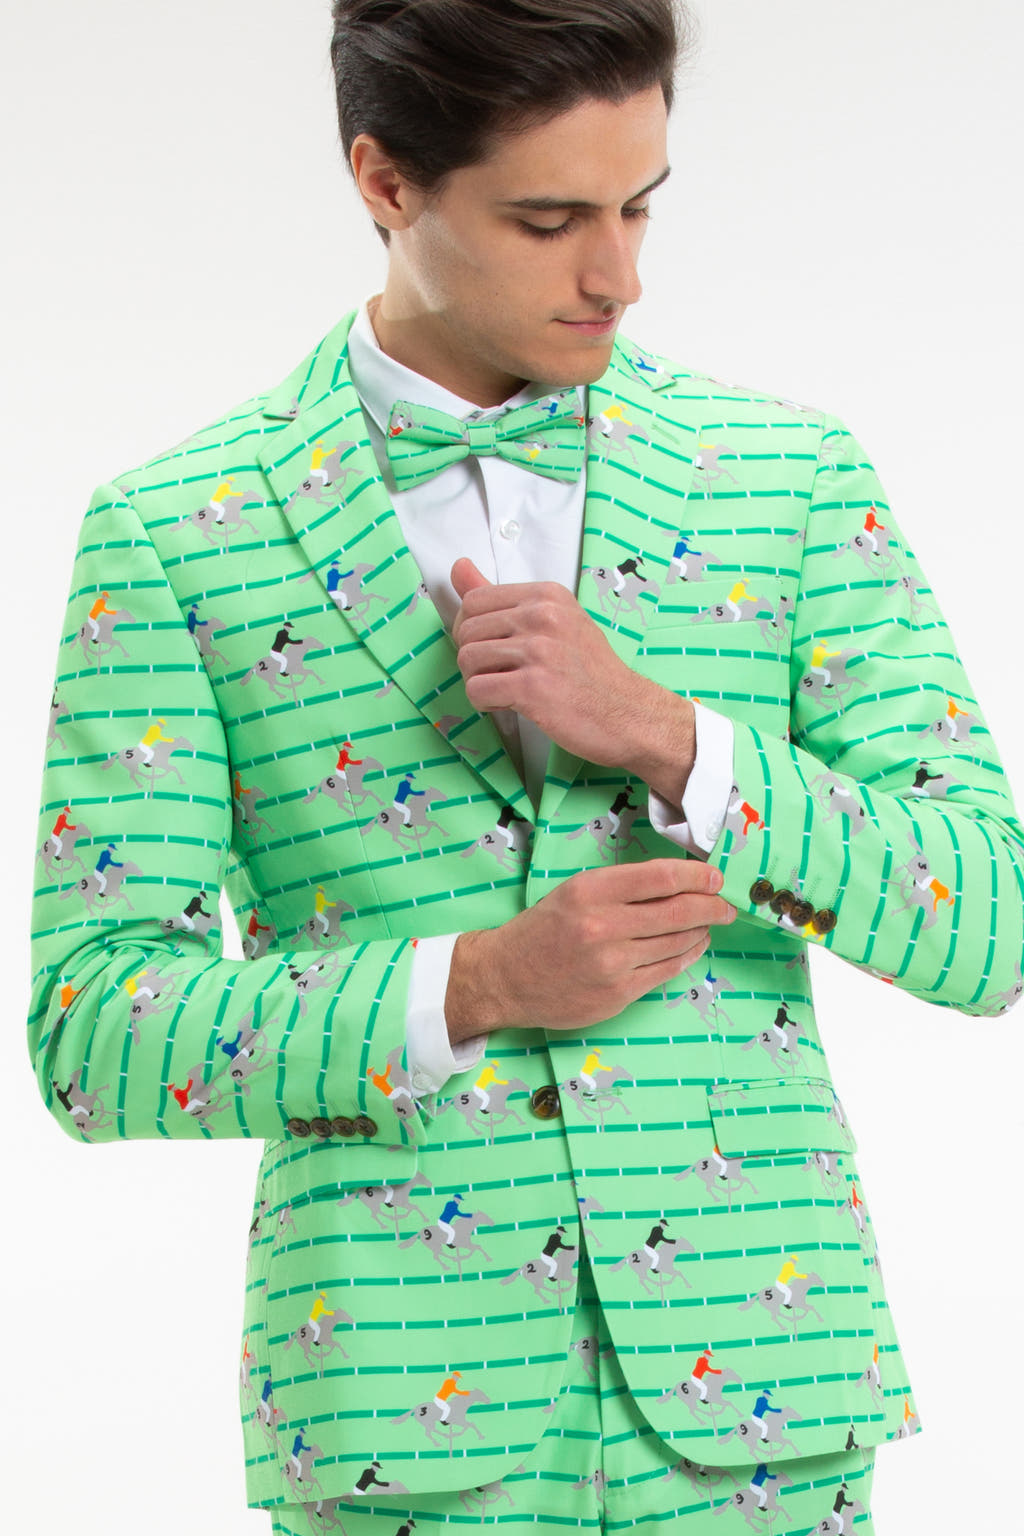 green pastel horse racing suit for men